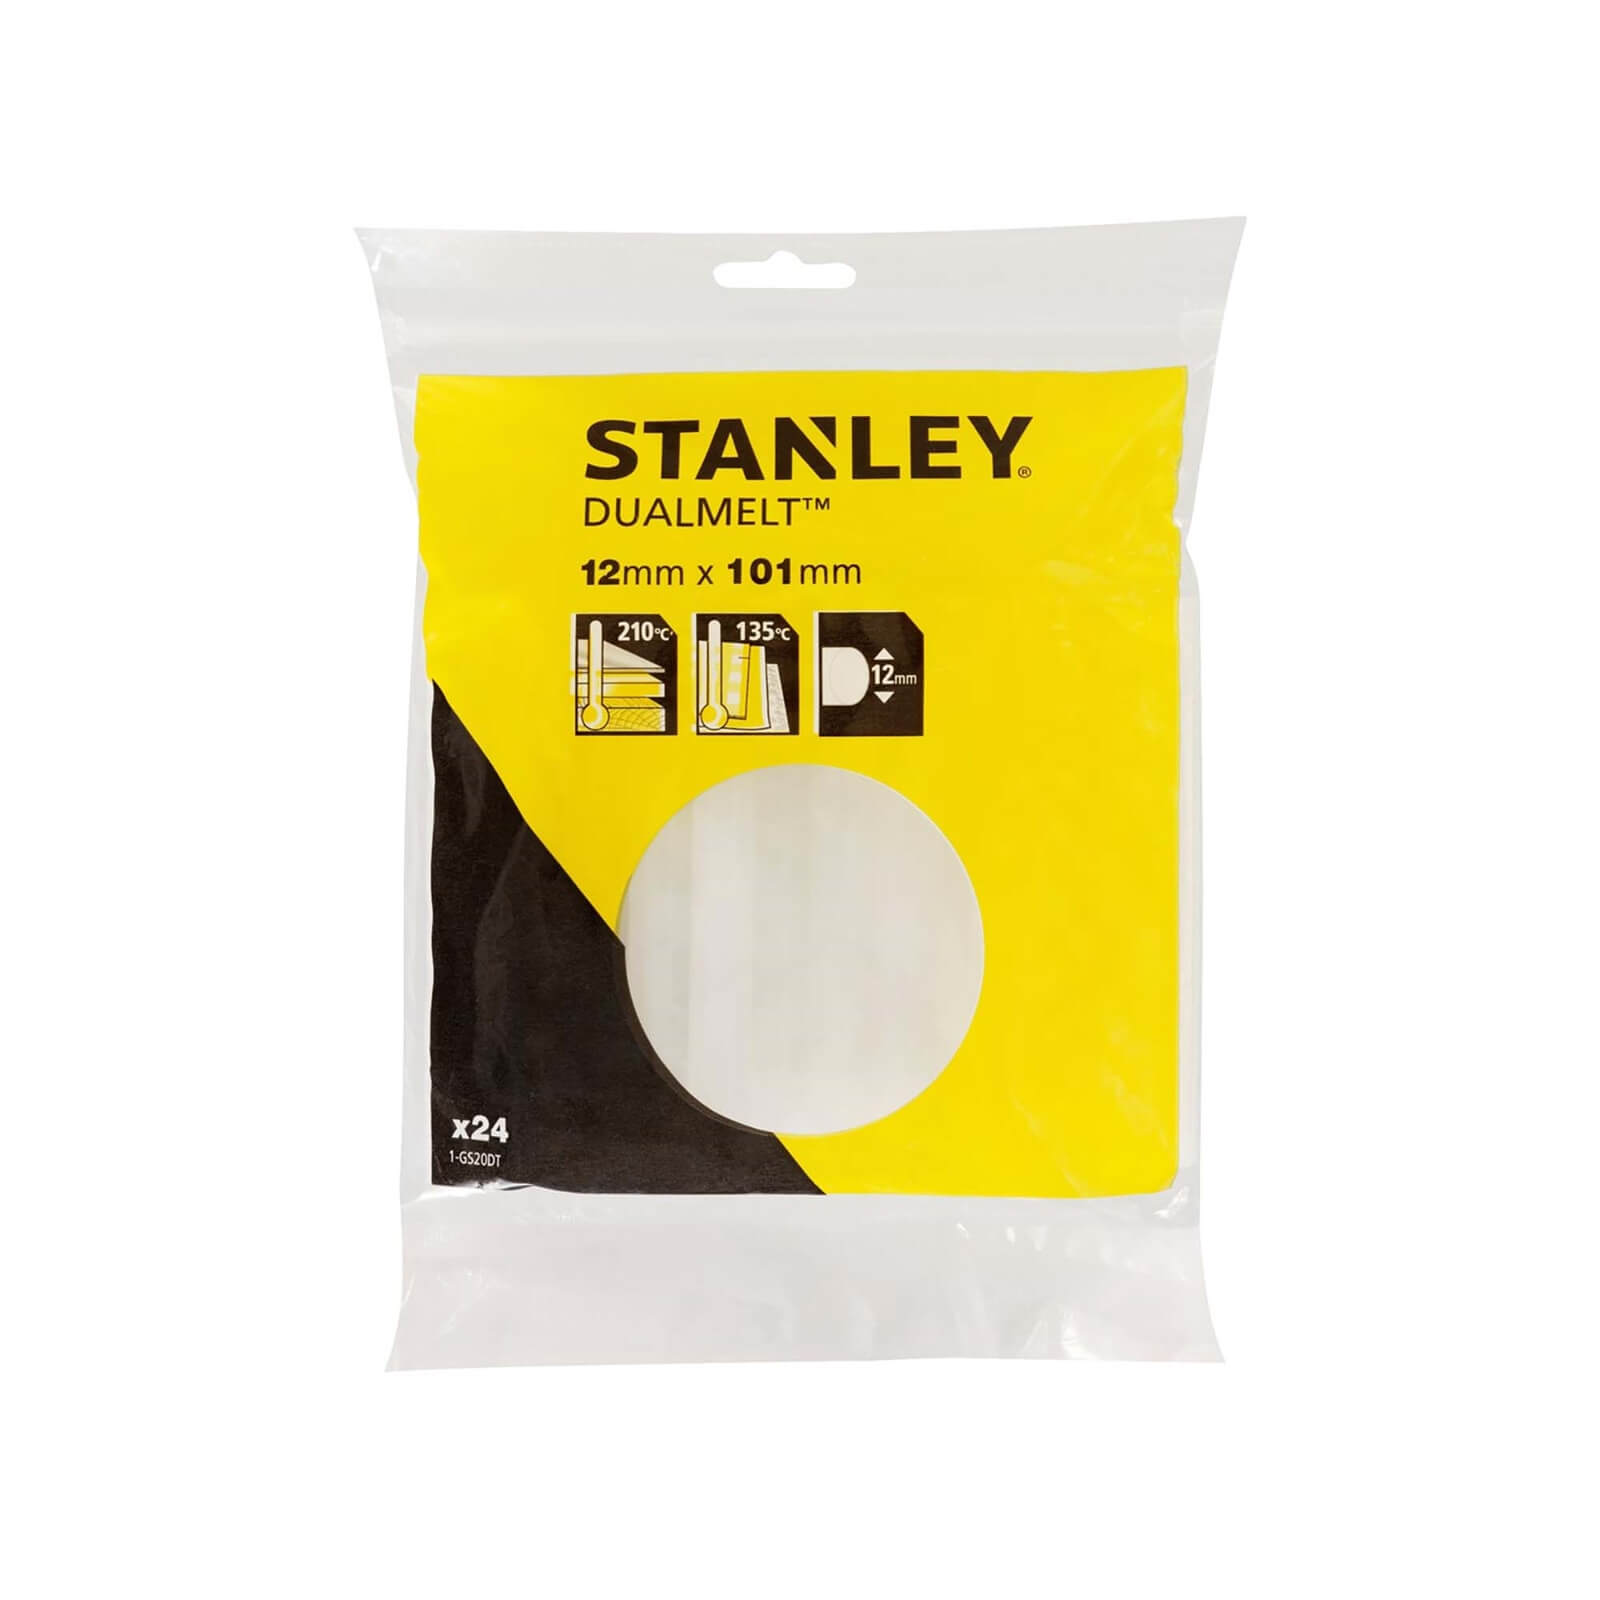 STANLEY DualMelt 12x101 mm Glue Sticks - Pack of 24 (1-GS20DT)